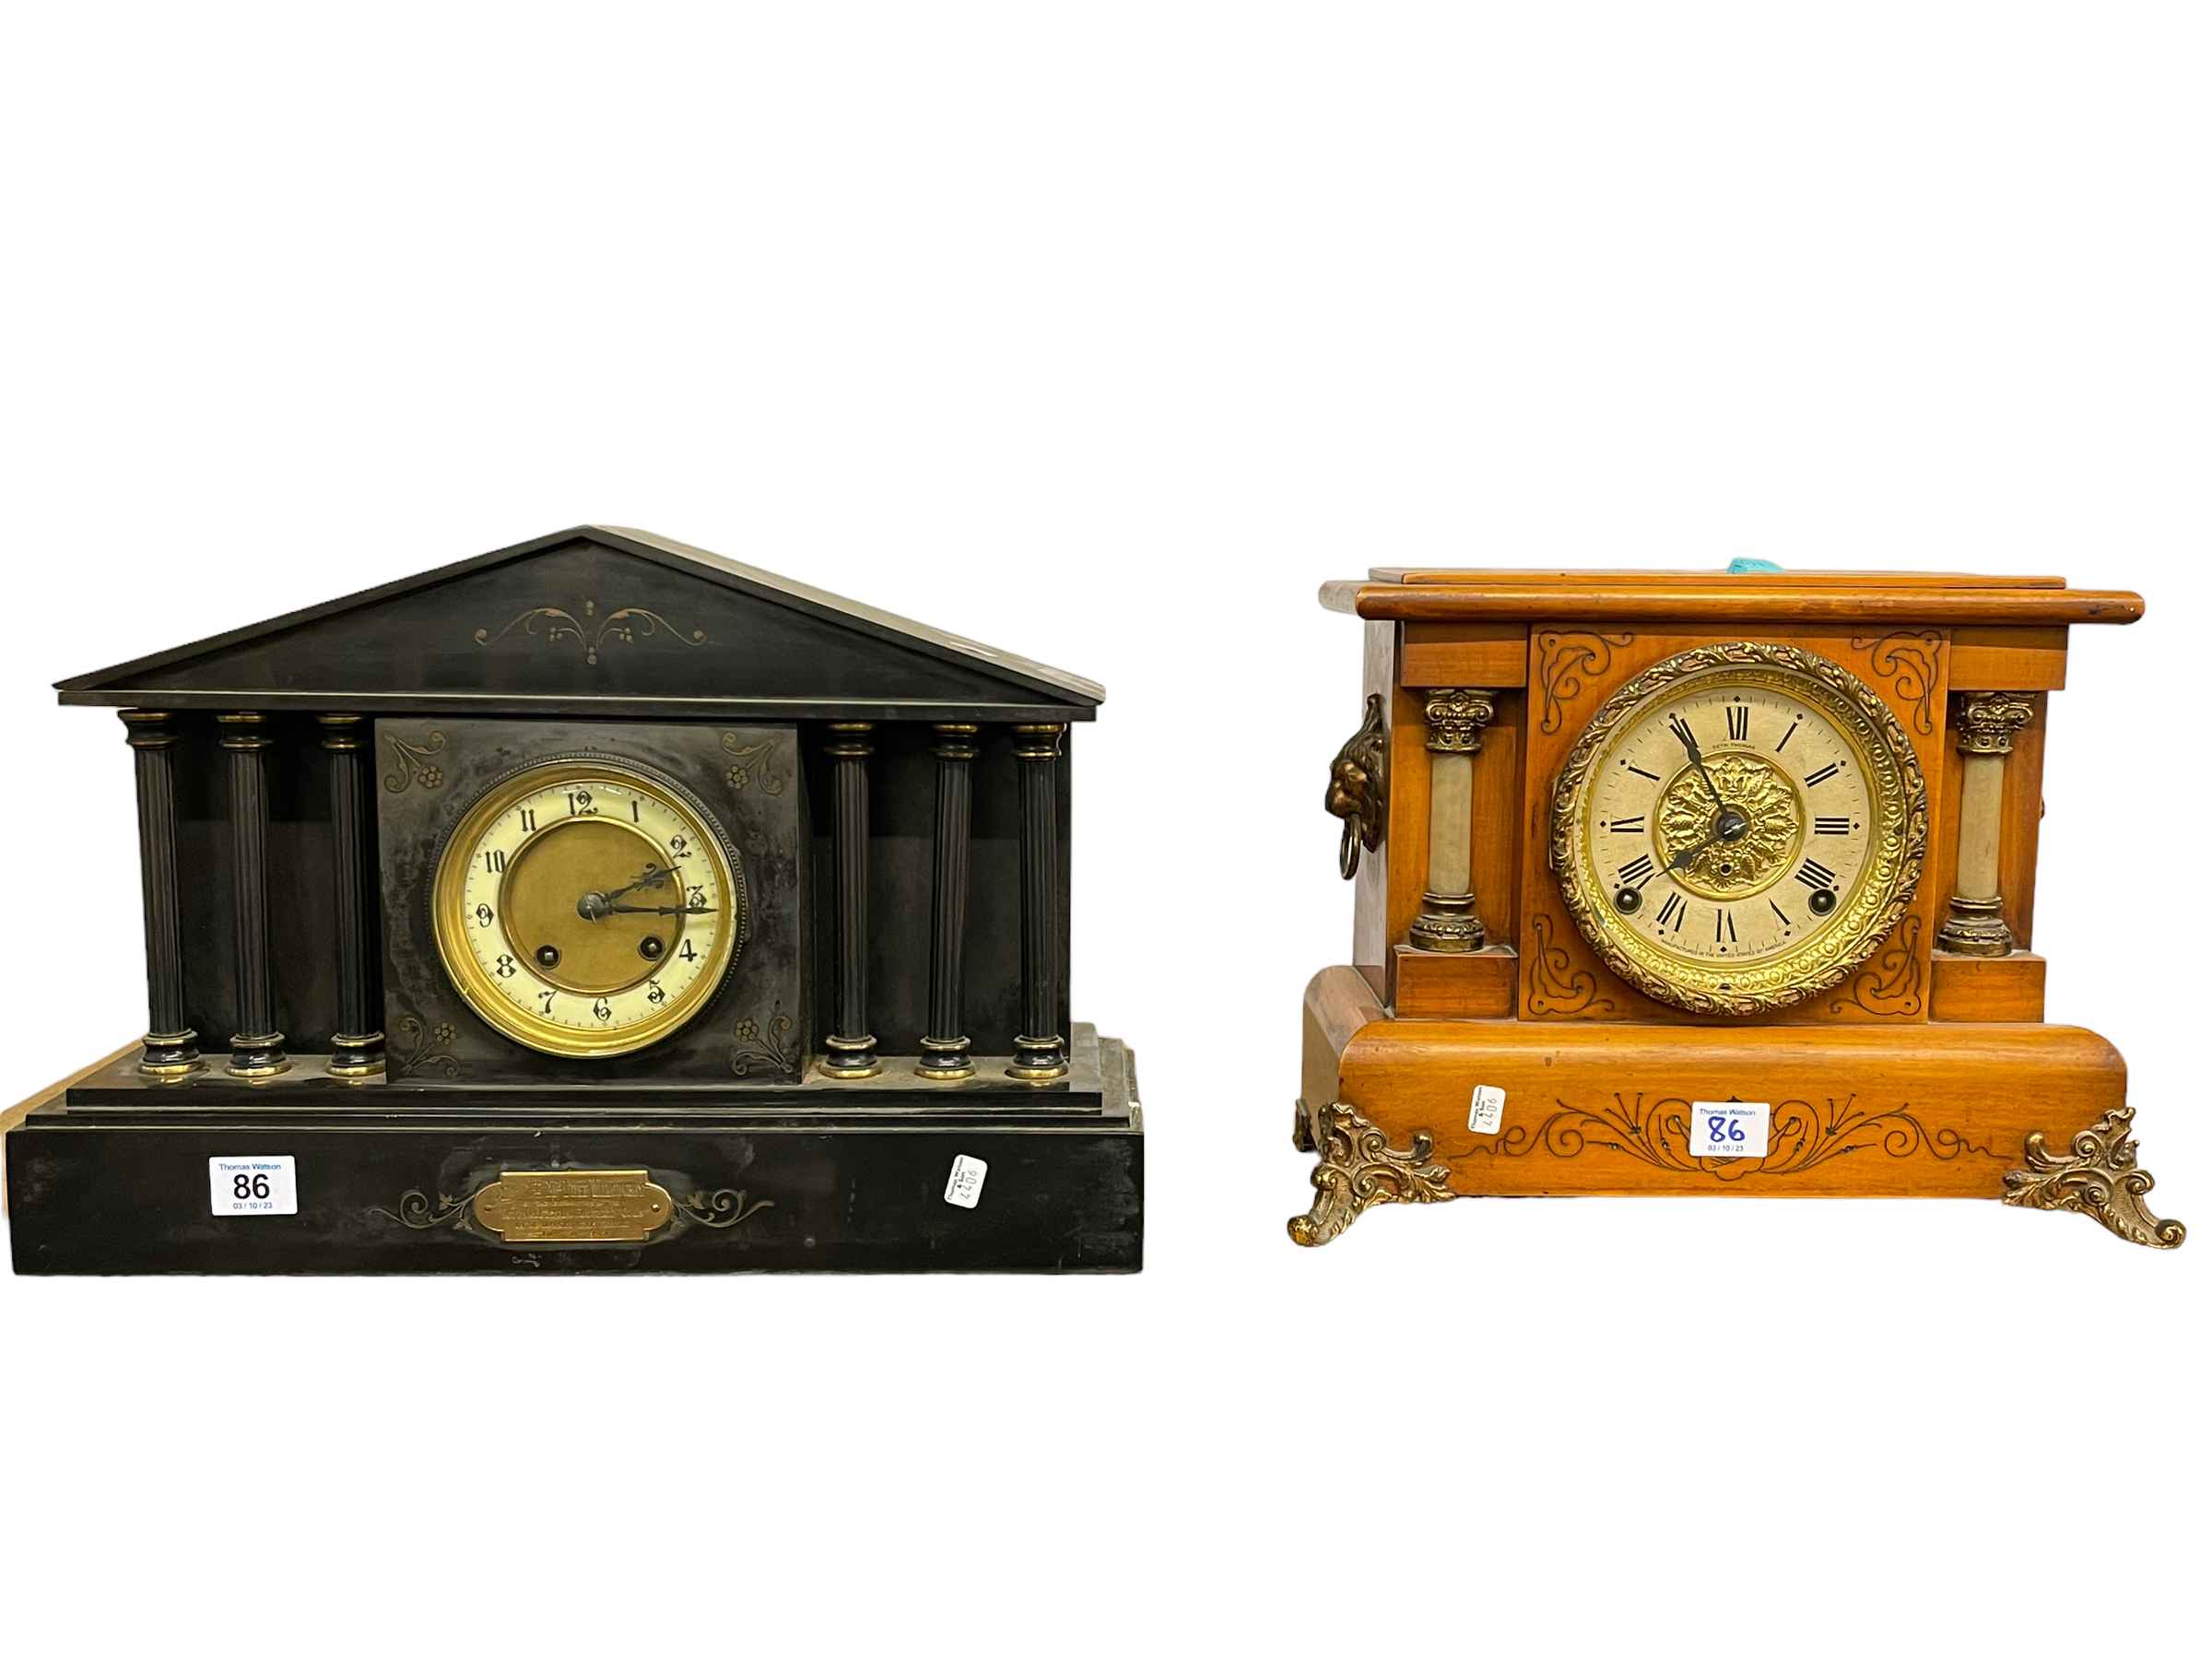 Slate mantel clock and wooden brass mounted mantel clock.